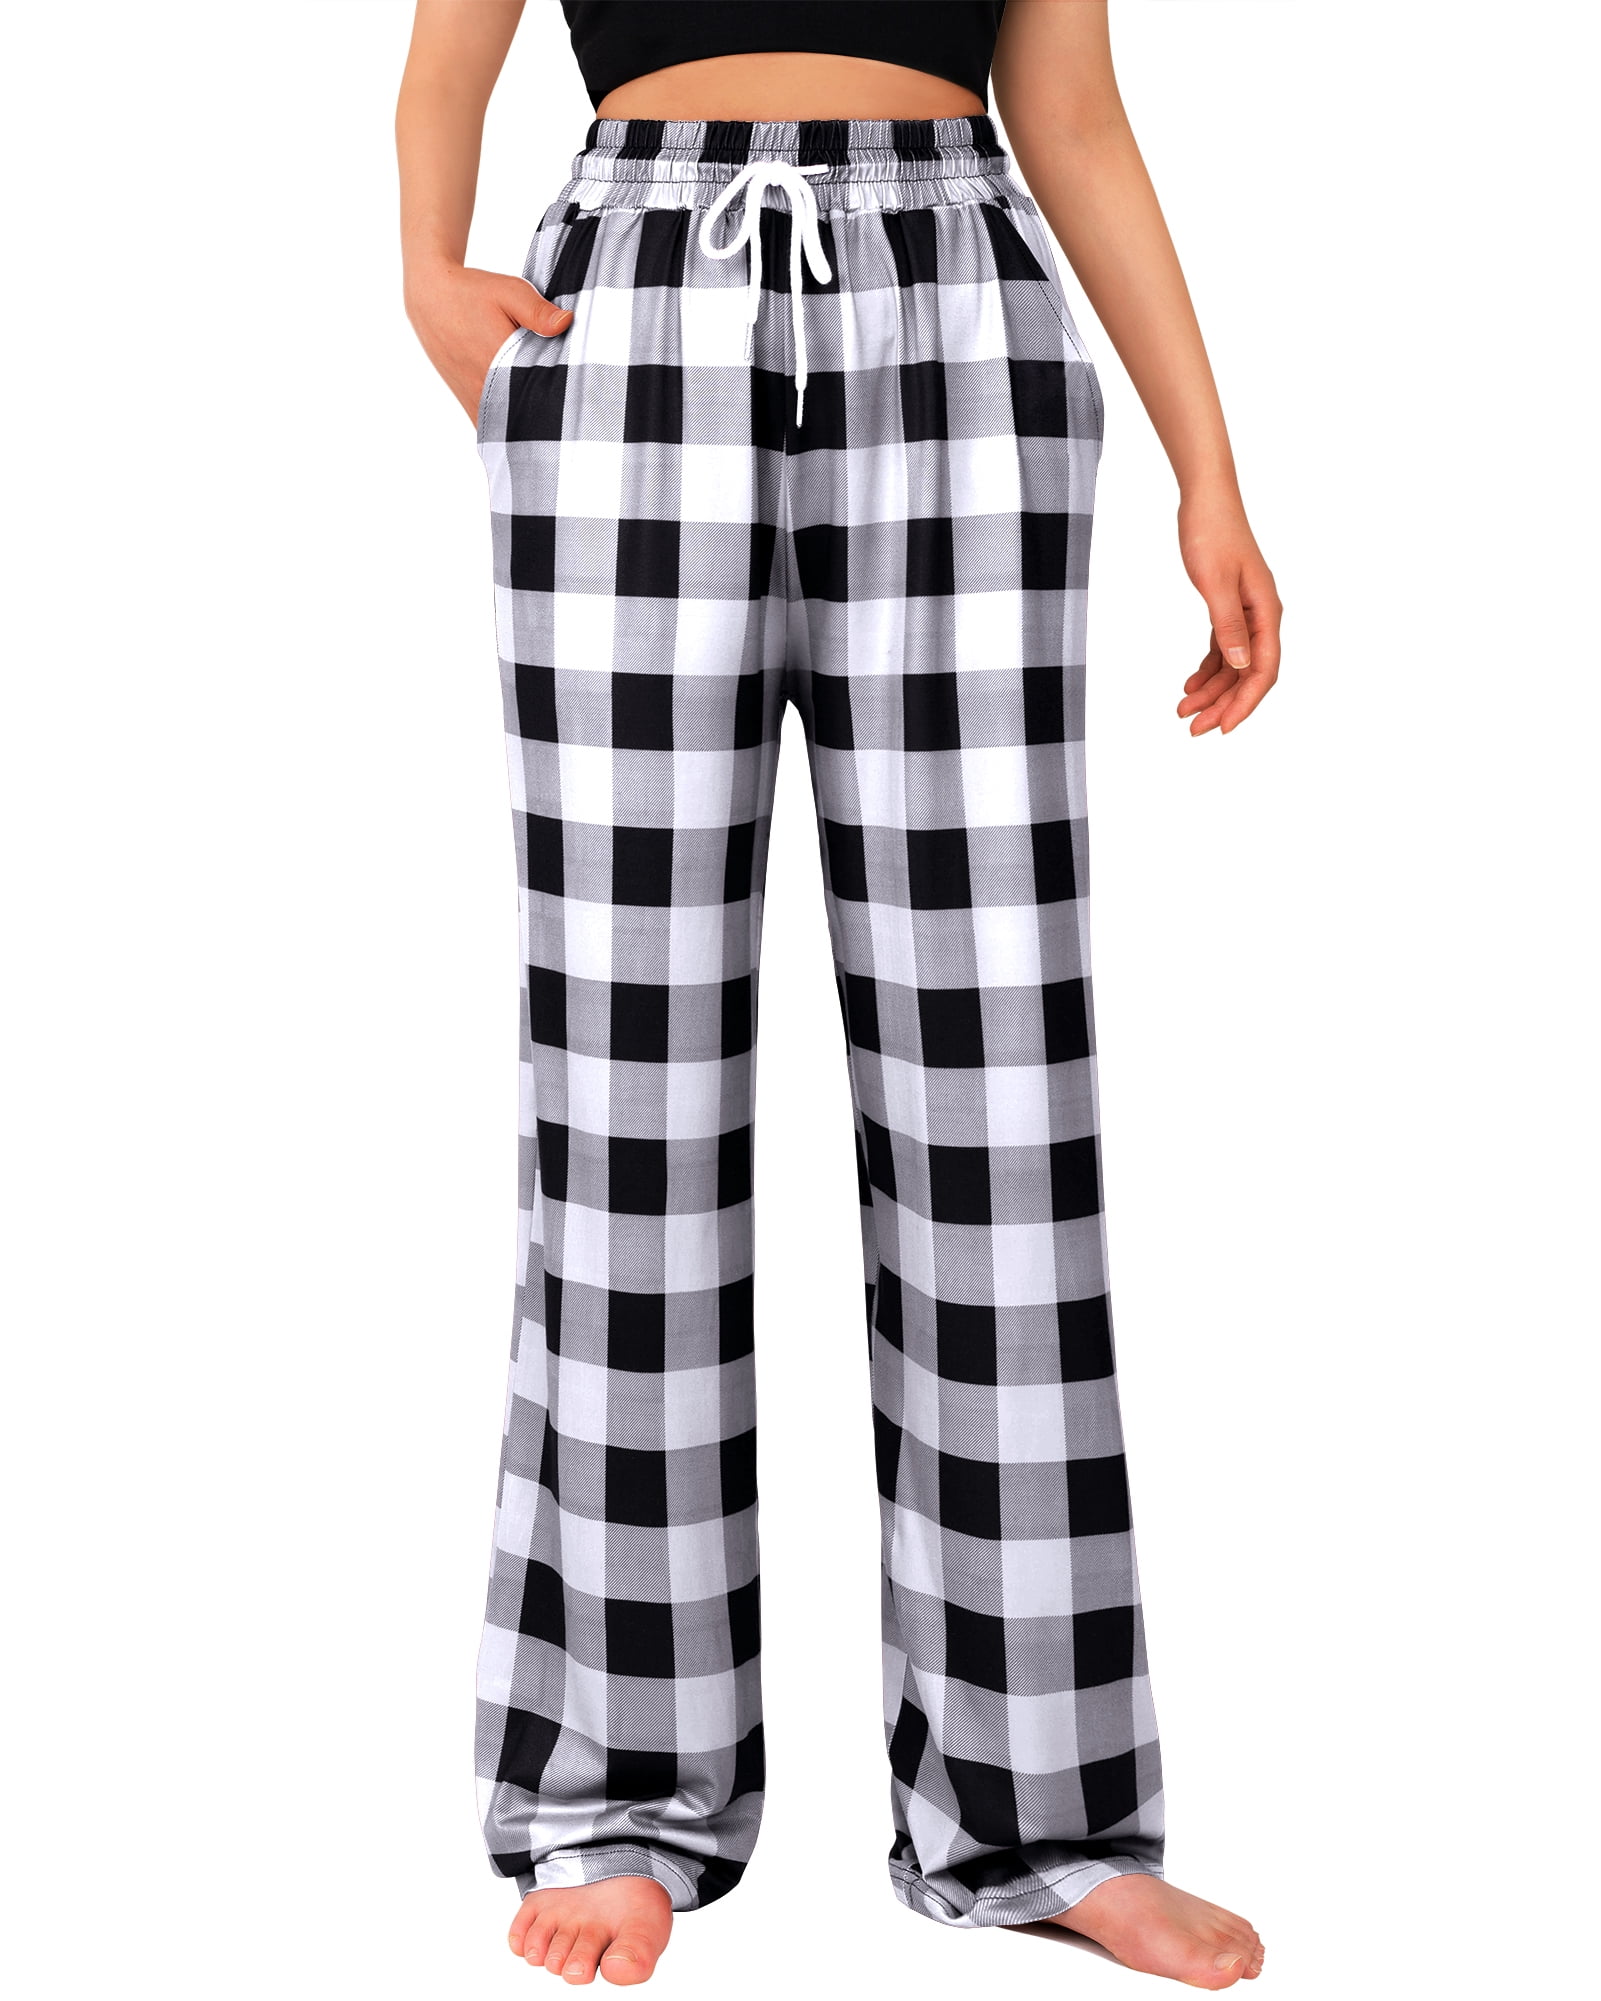 Siliteelon Women's Pajamas Pants Stretch PJ Bottoms Drawstring Lounge ...